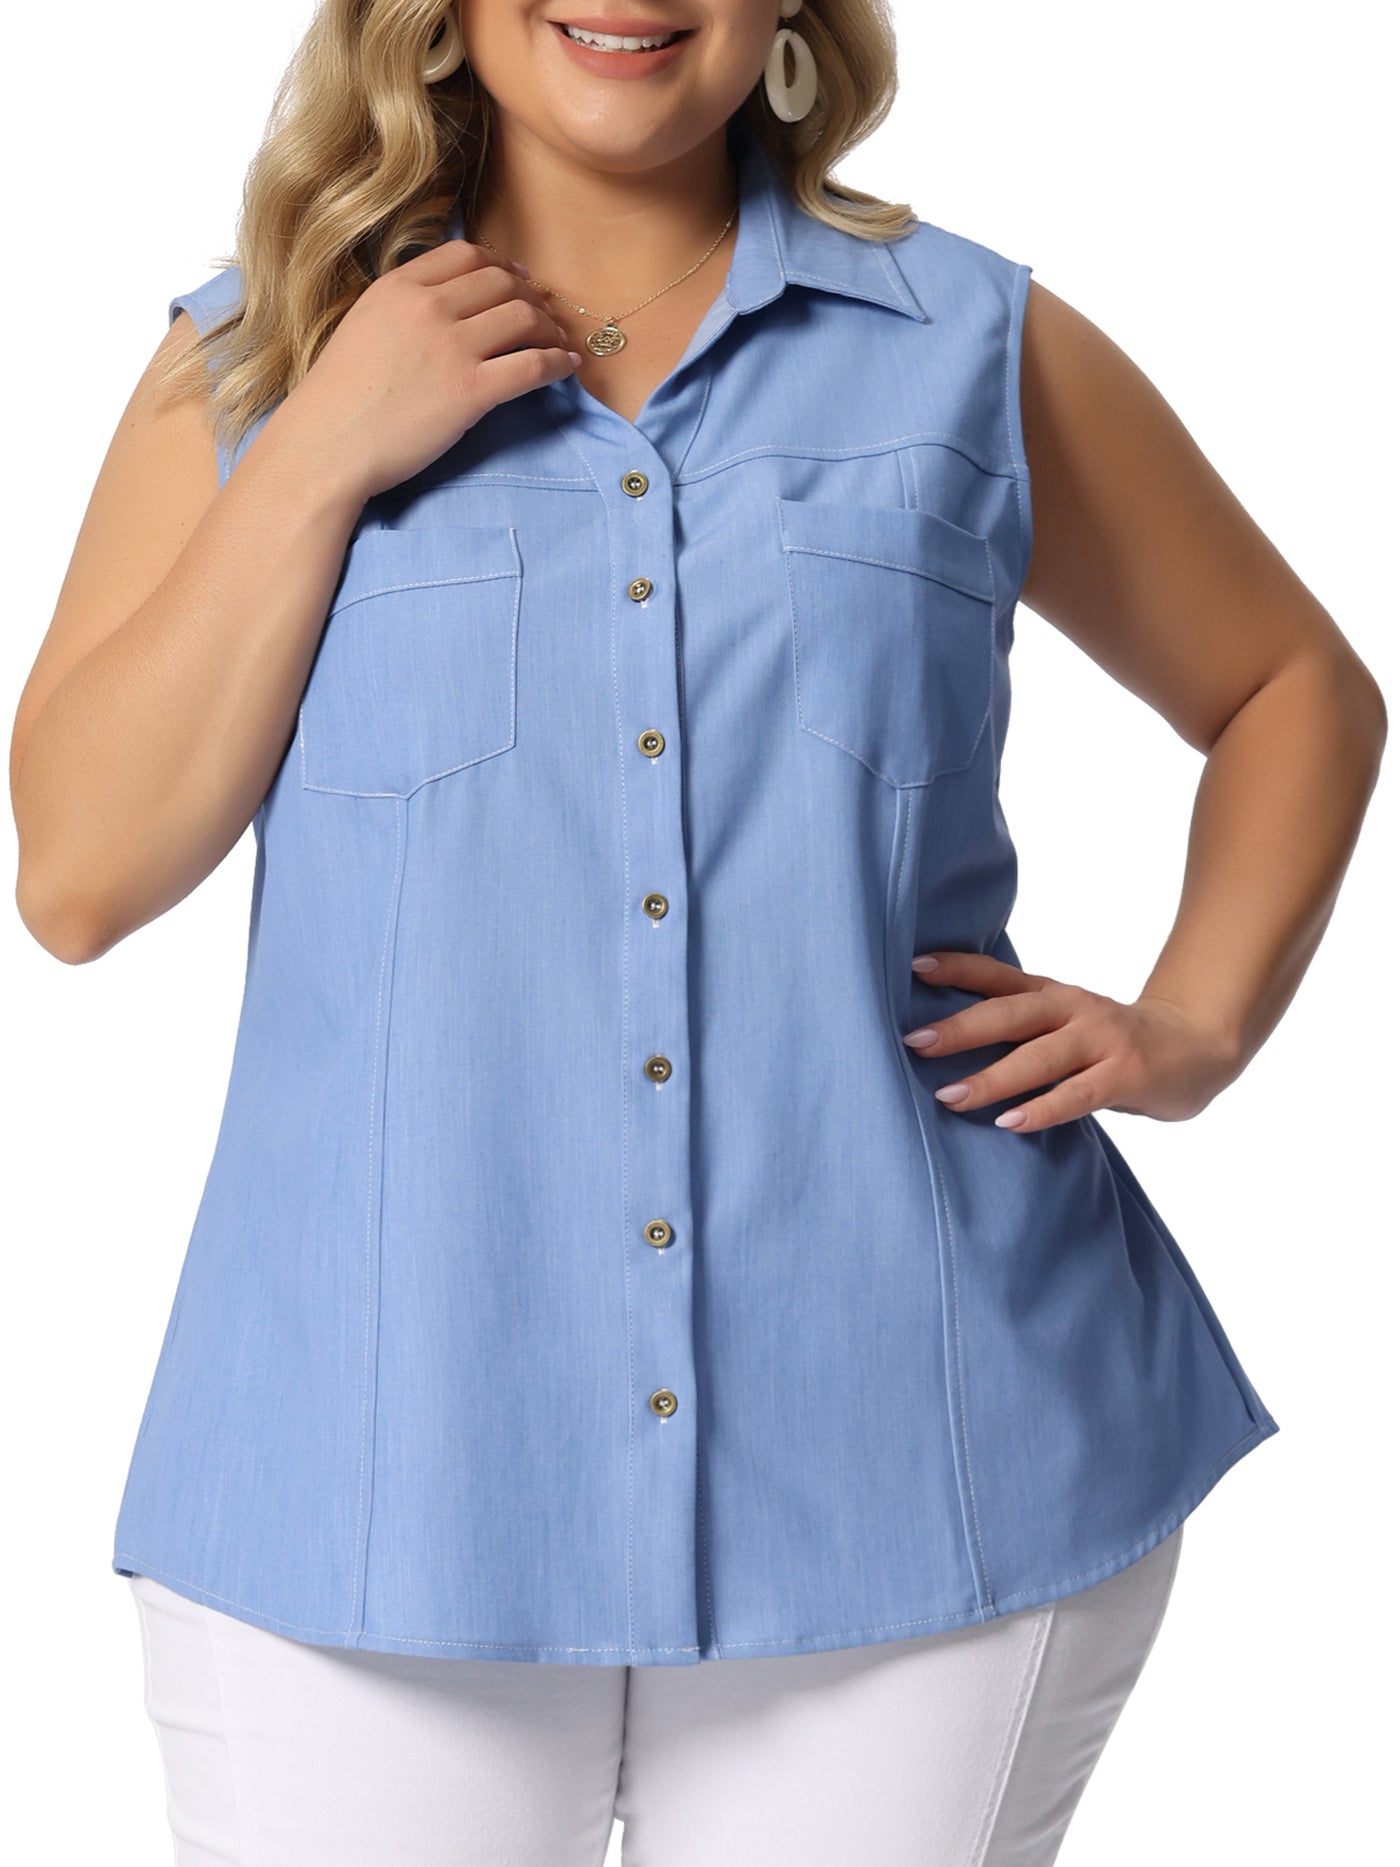 Bublédon Women's Plus Size Denim Shirt Sleeveless Front Pockets Chambray Shirts